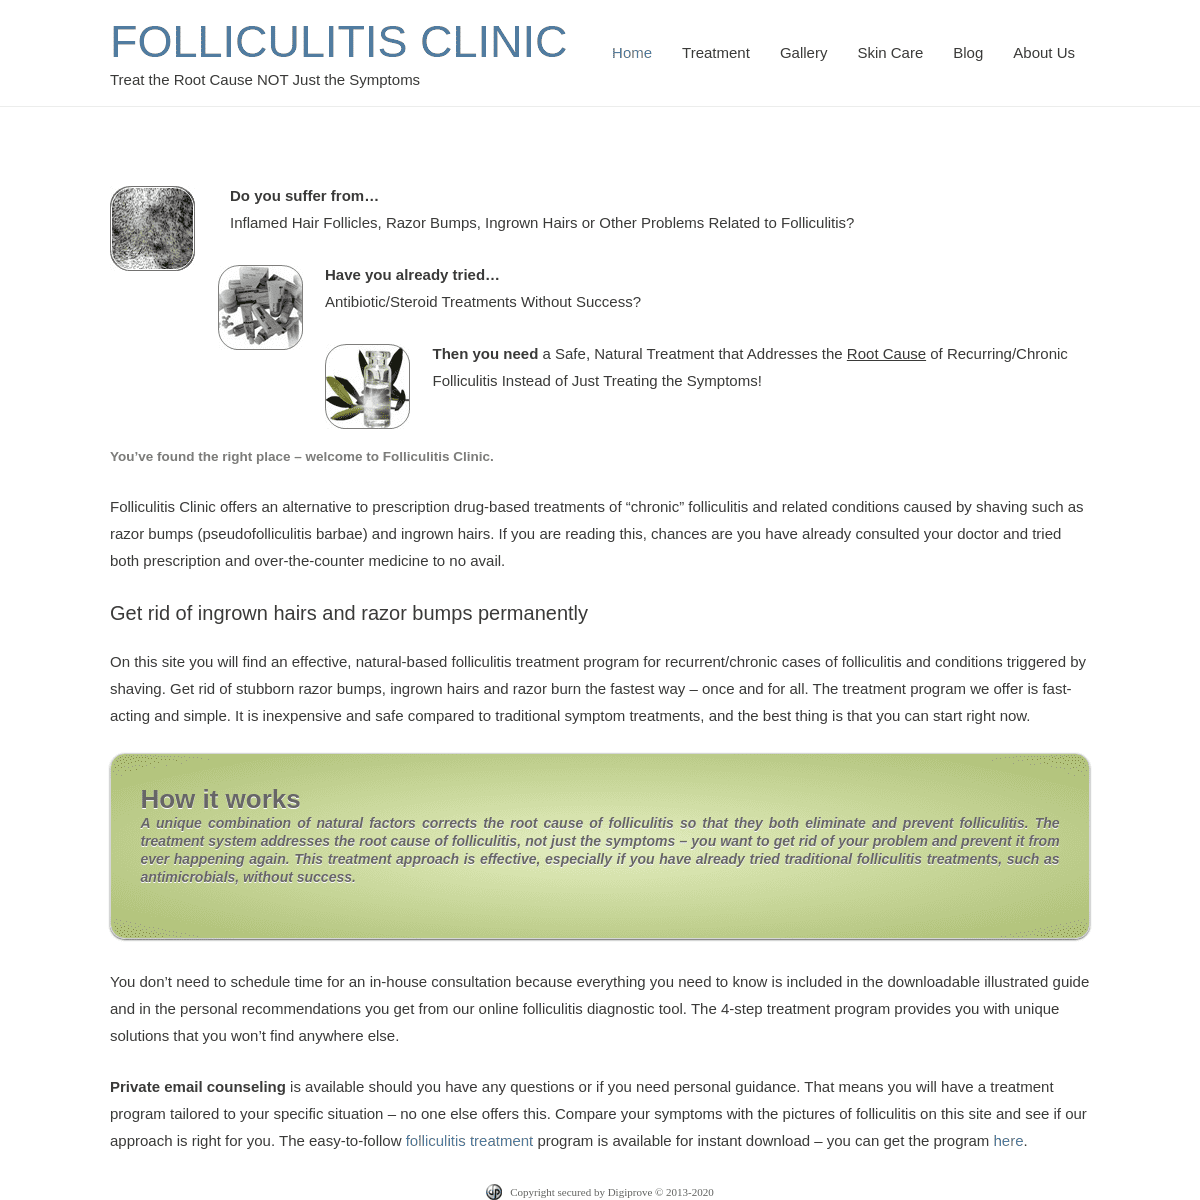 A complete backup of folliculitisclinic.com